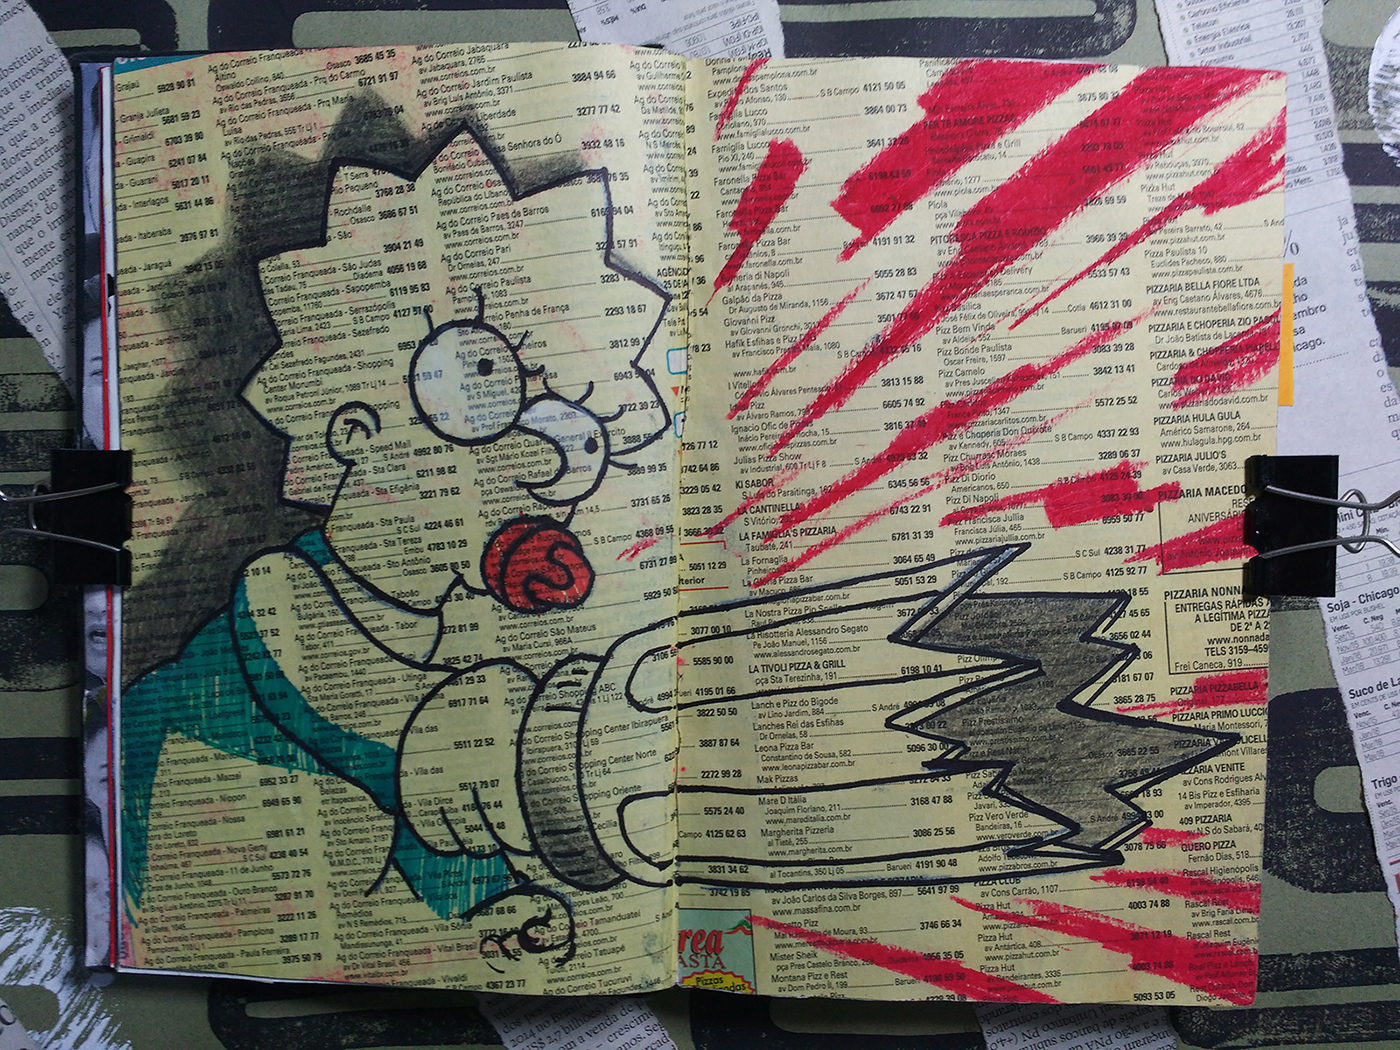 sketch sketchbook watercolors charcoal moleskine lovecraft zombie Kim jong un simpsons